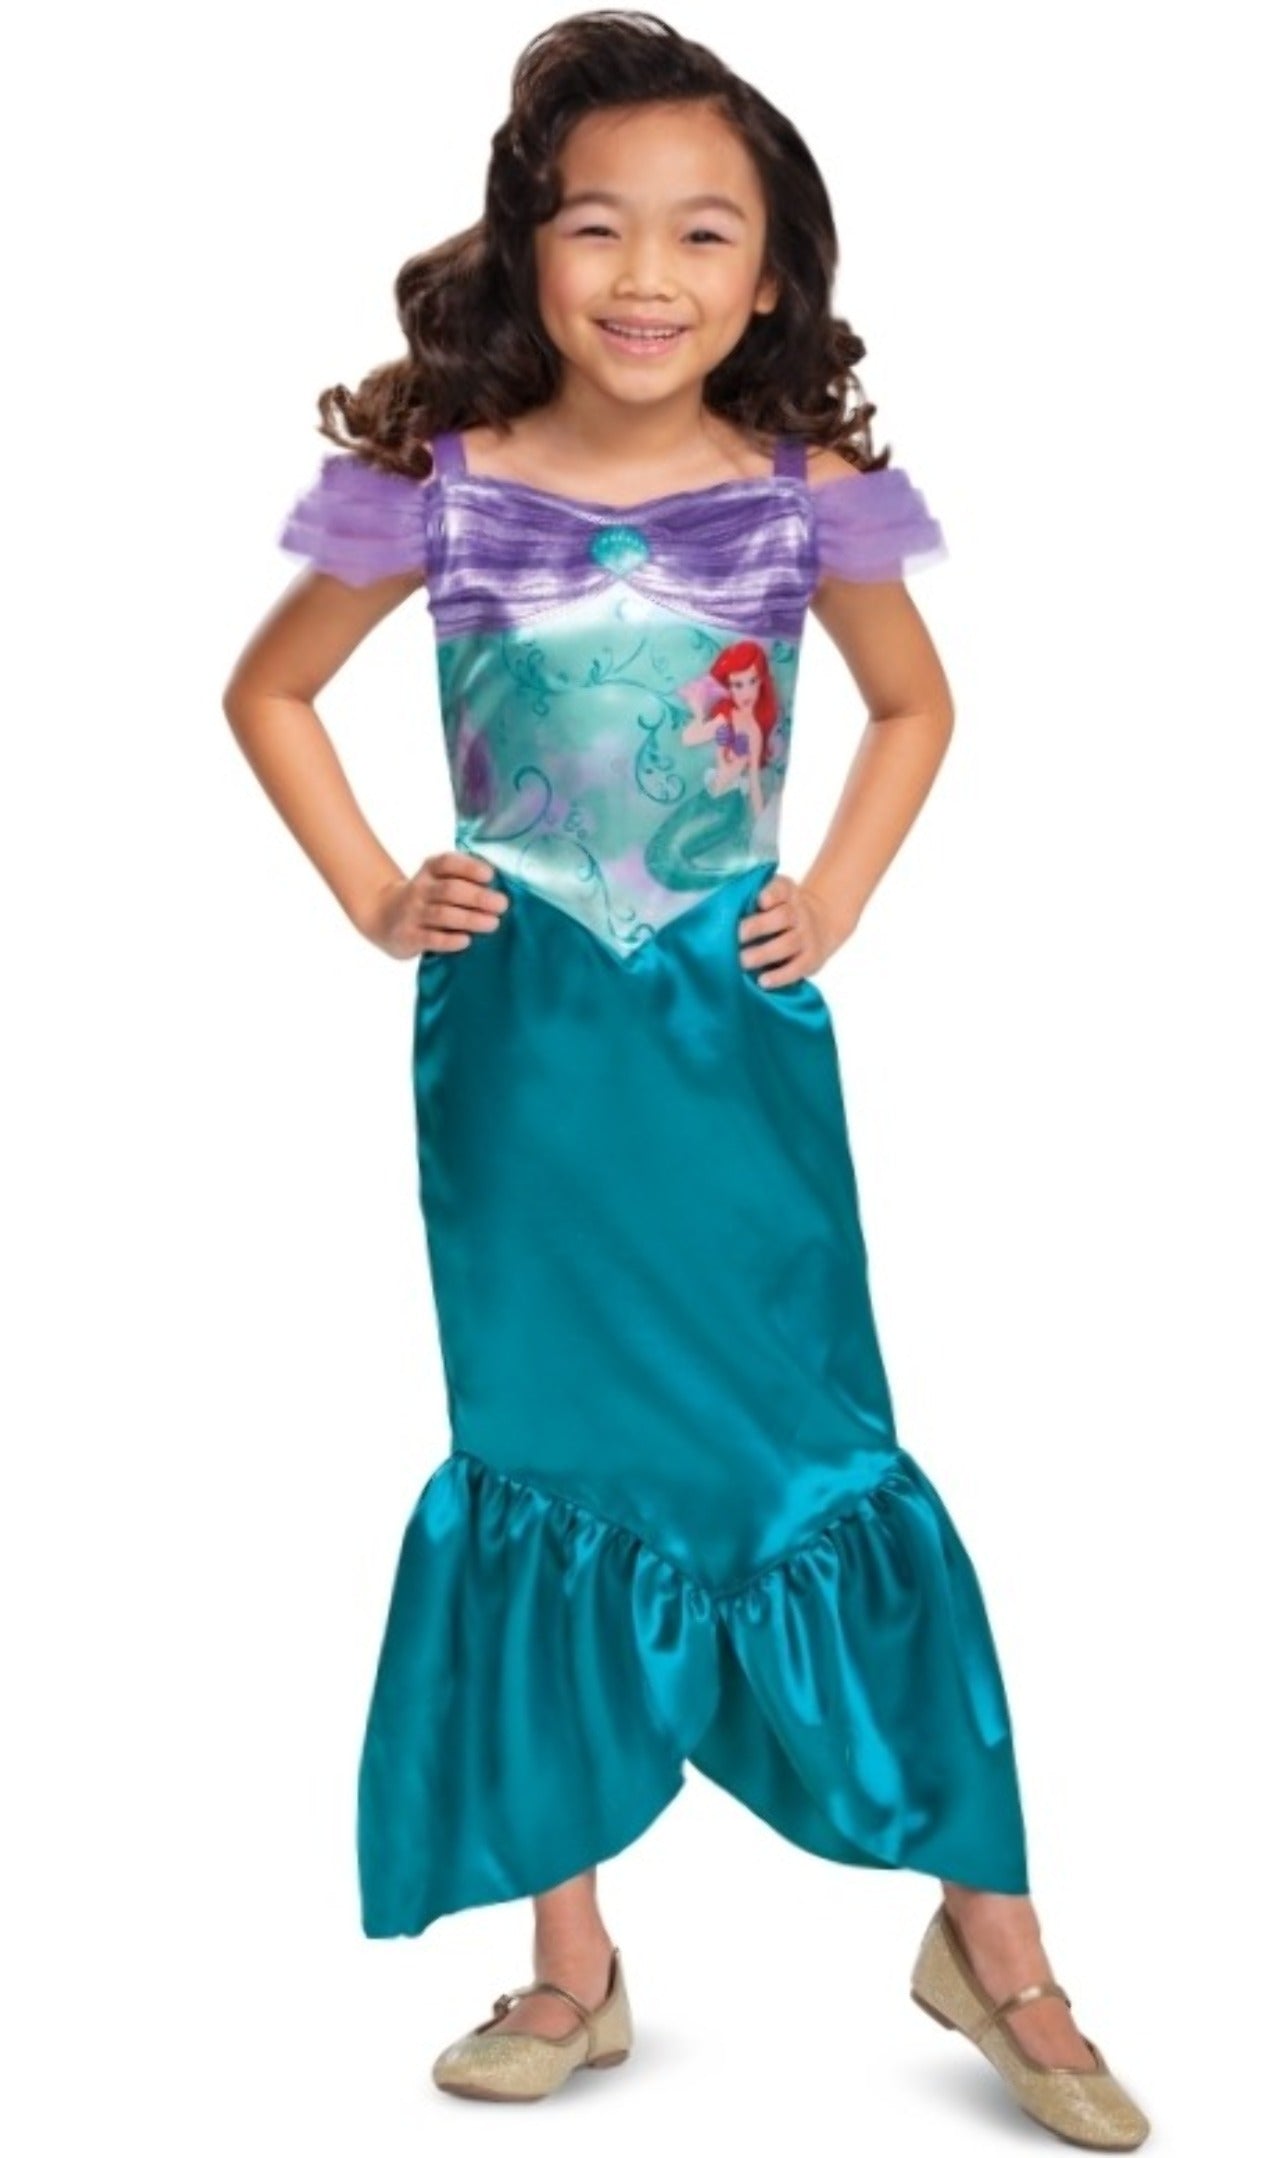 Disfraz de Sirenita para niña - Disfraces No solo fiesta